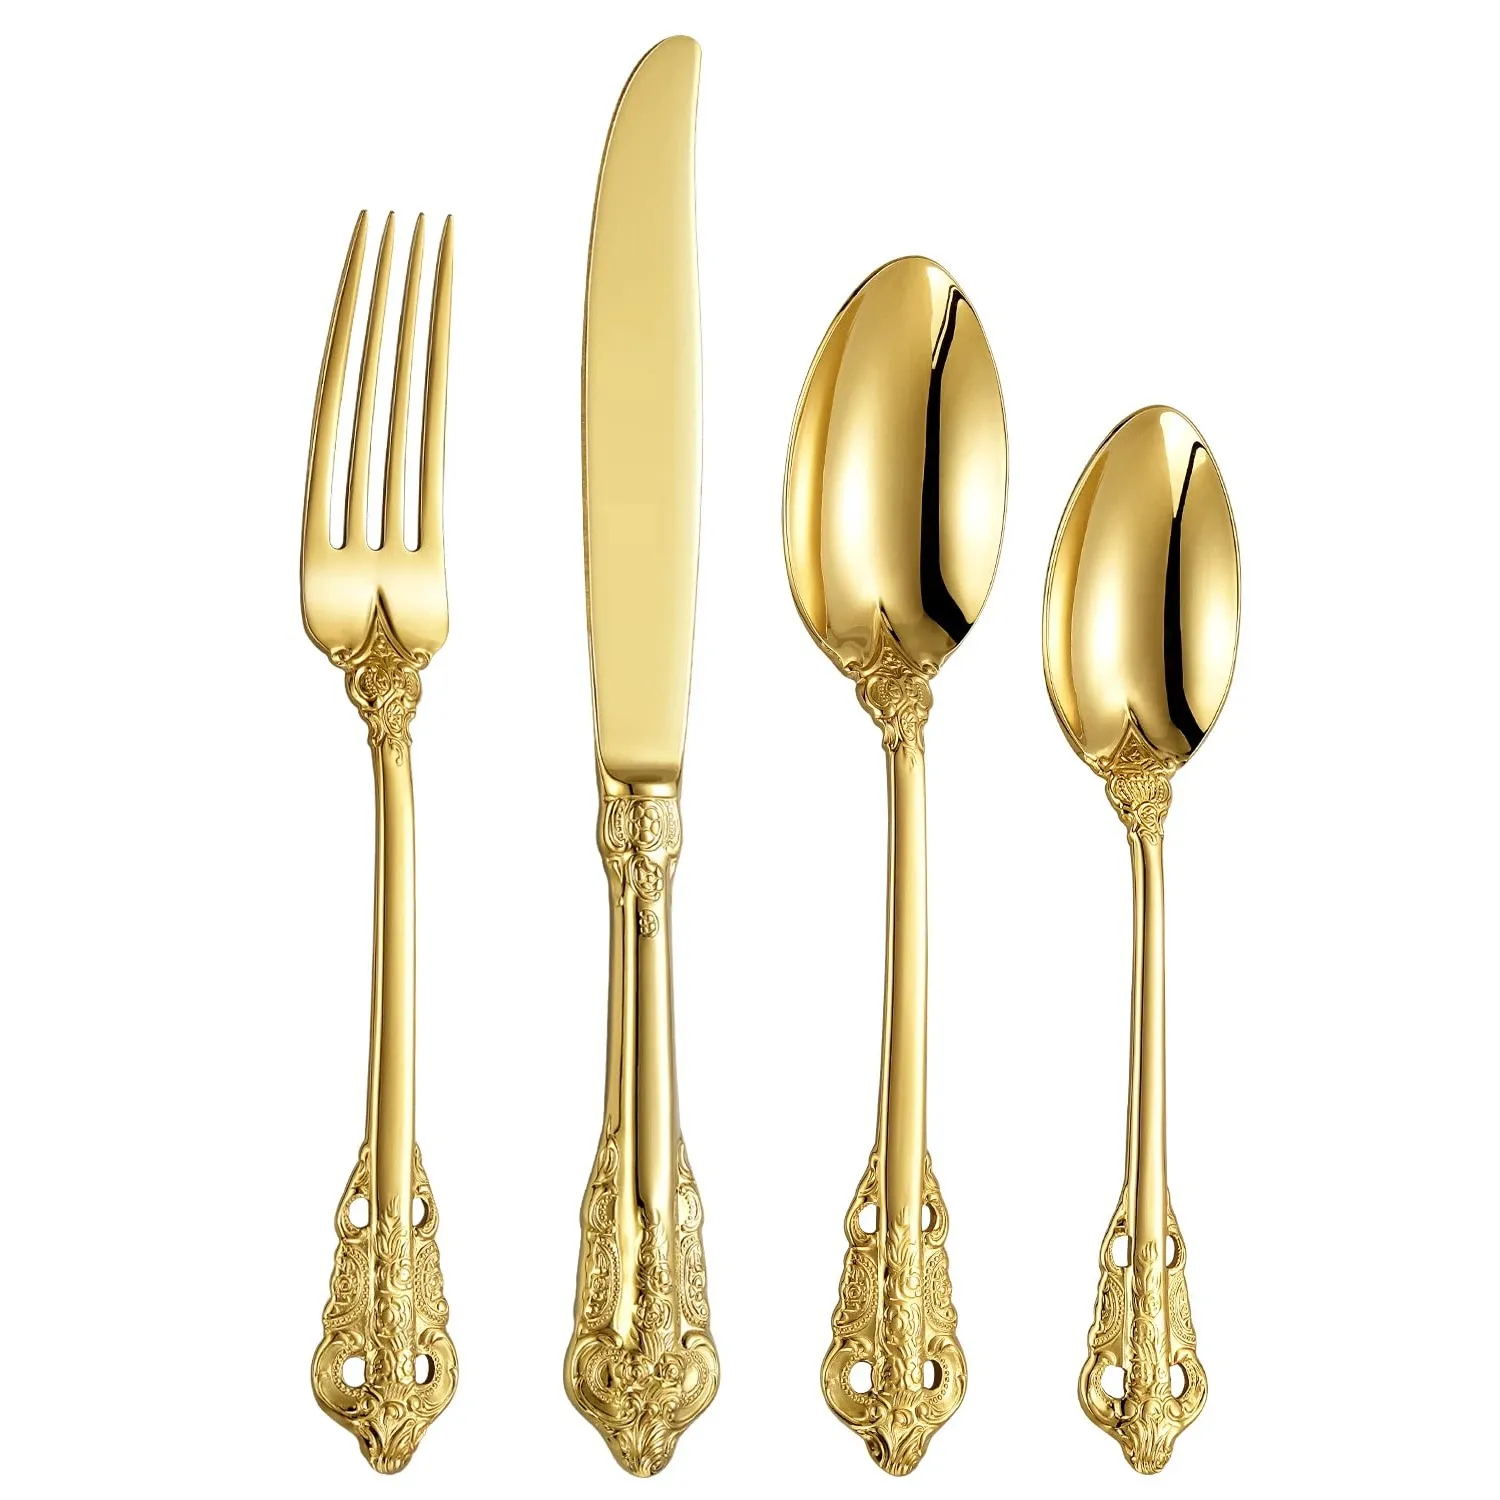 Wedding Cutlery Set Luxury Baroque Spoon Stainless Steel Golden Spoon Juego De Cubiertos